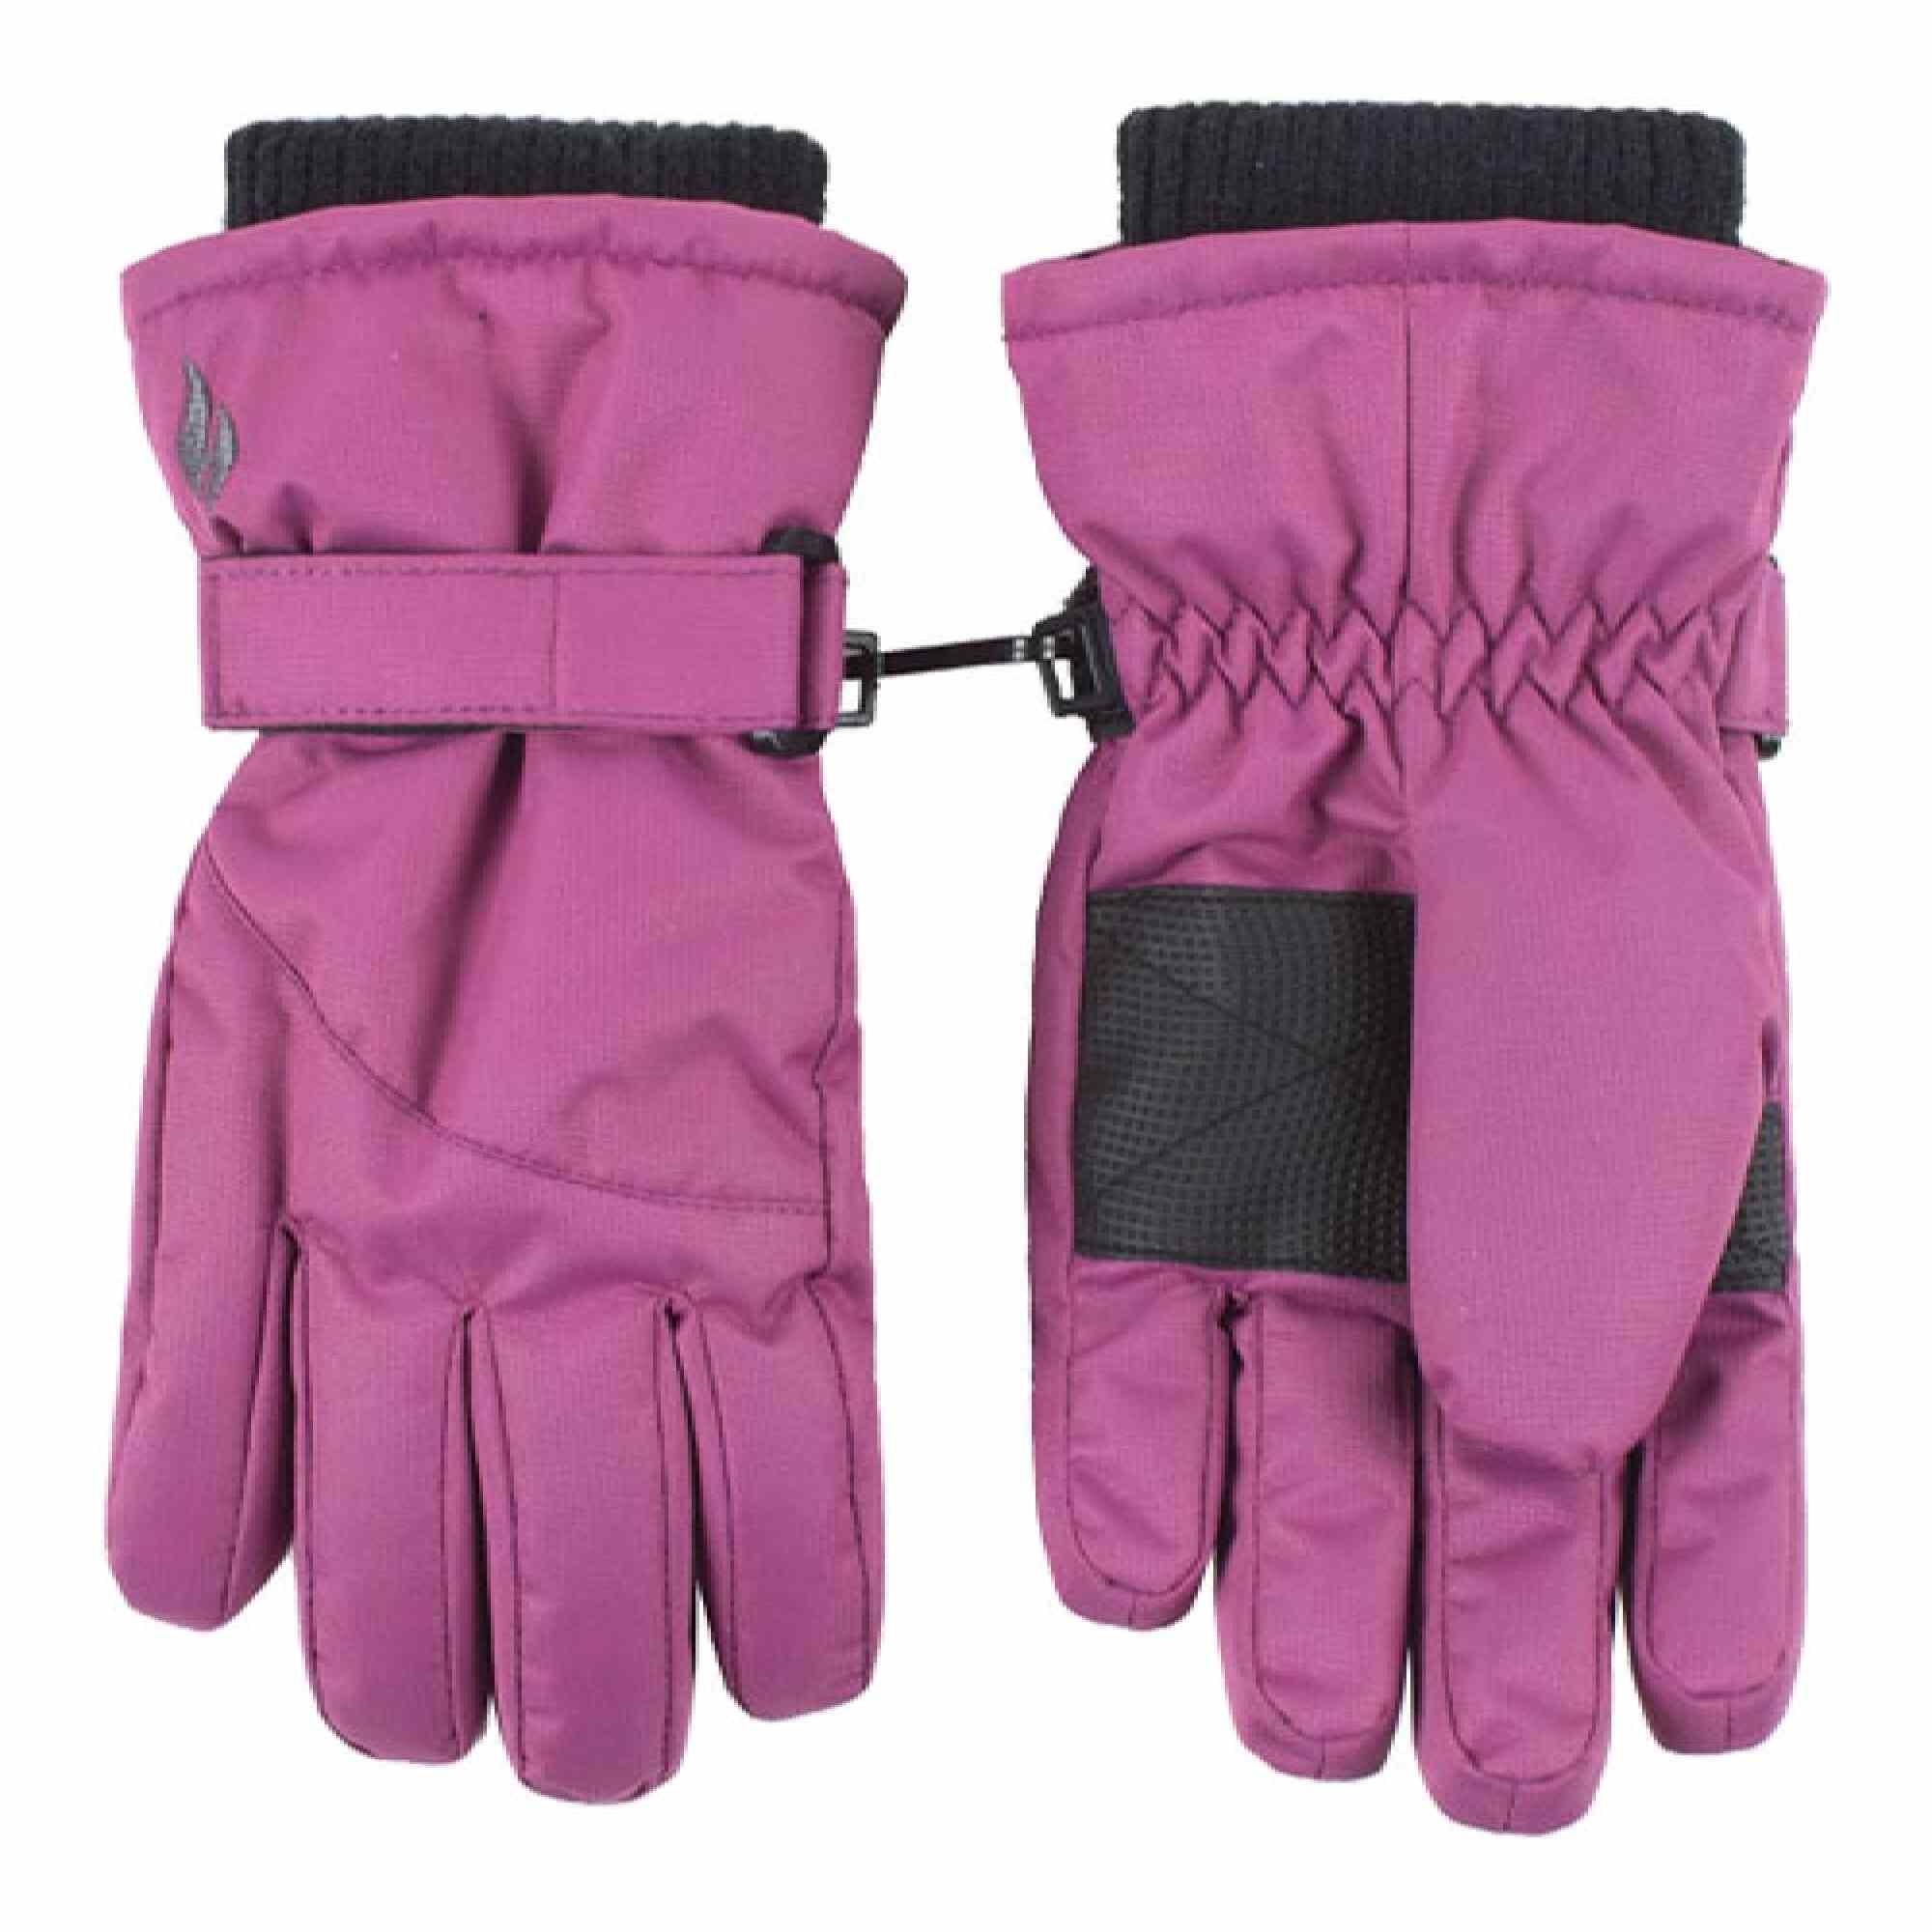 HEAT HOLDERS Childrens Pink Winter Fleece Lined Waterproof Thermal Snow Ski Gloves